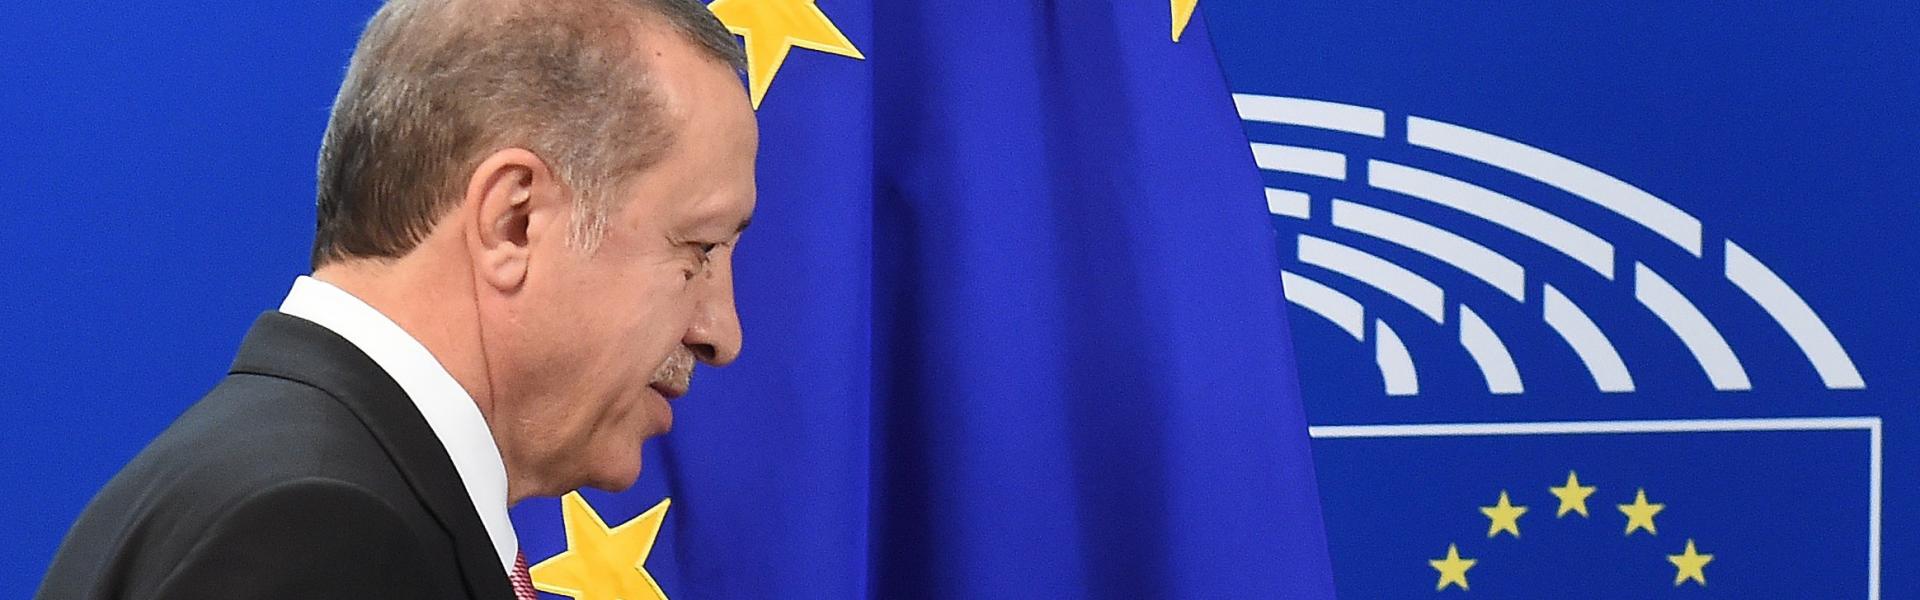 Turkey-EU: Towards the post-candidacy era 27